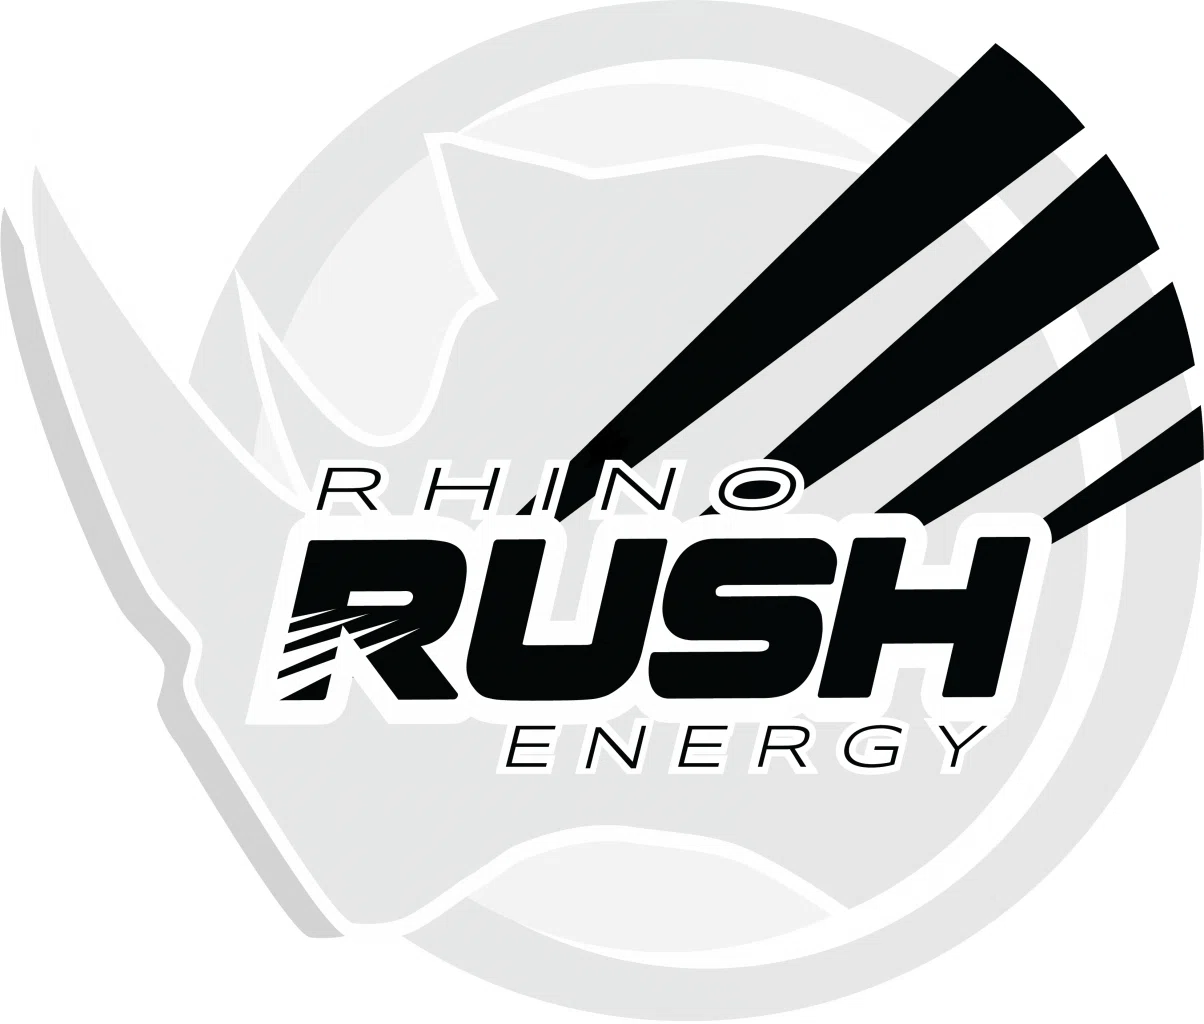 Does Rhino Rush offer a loyalty or rewards program? — Knoji.